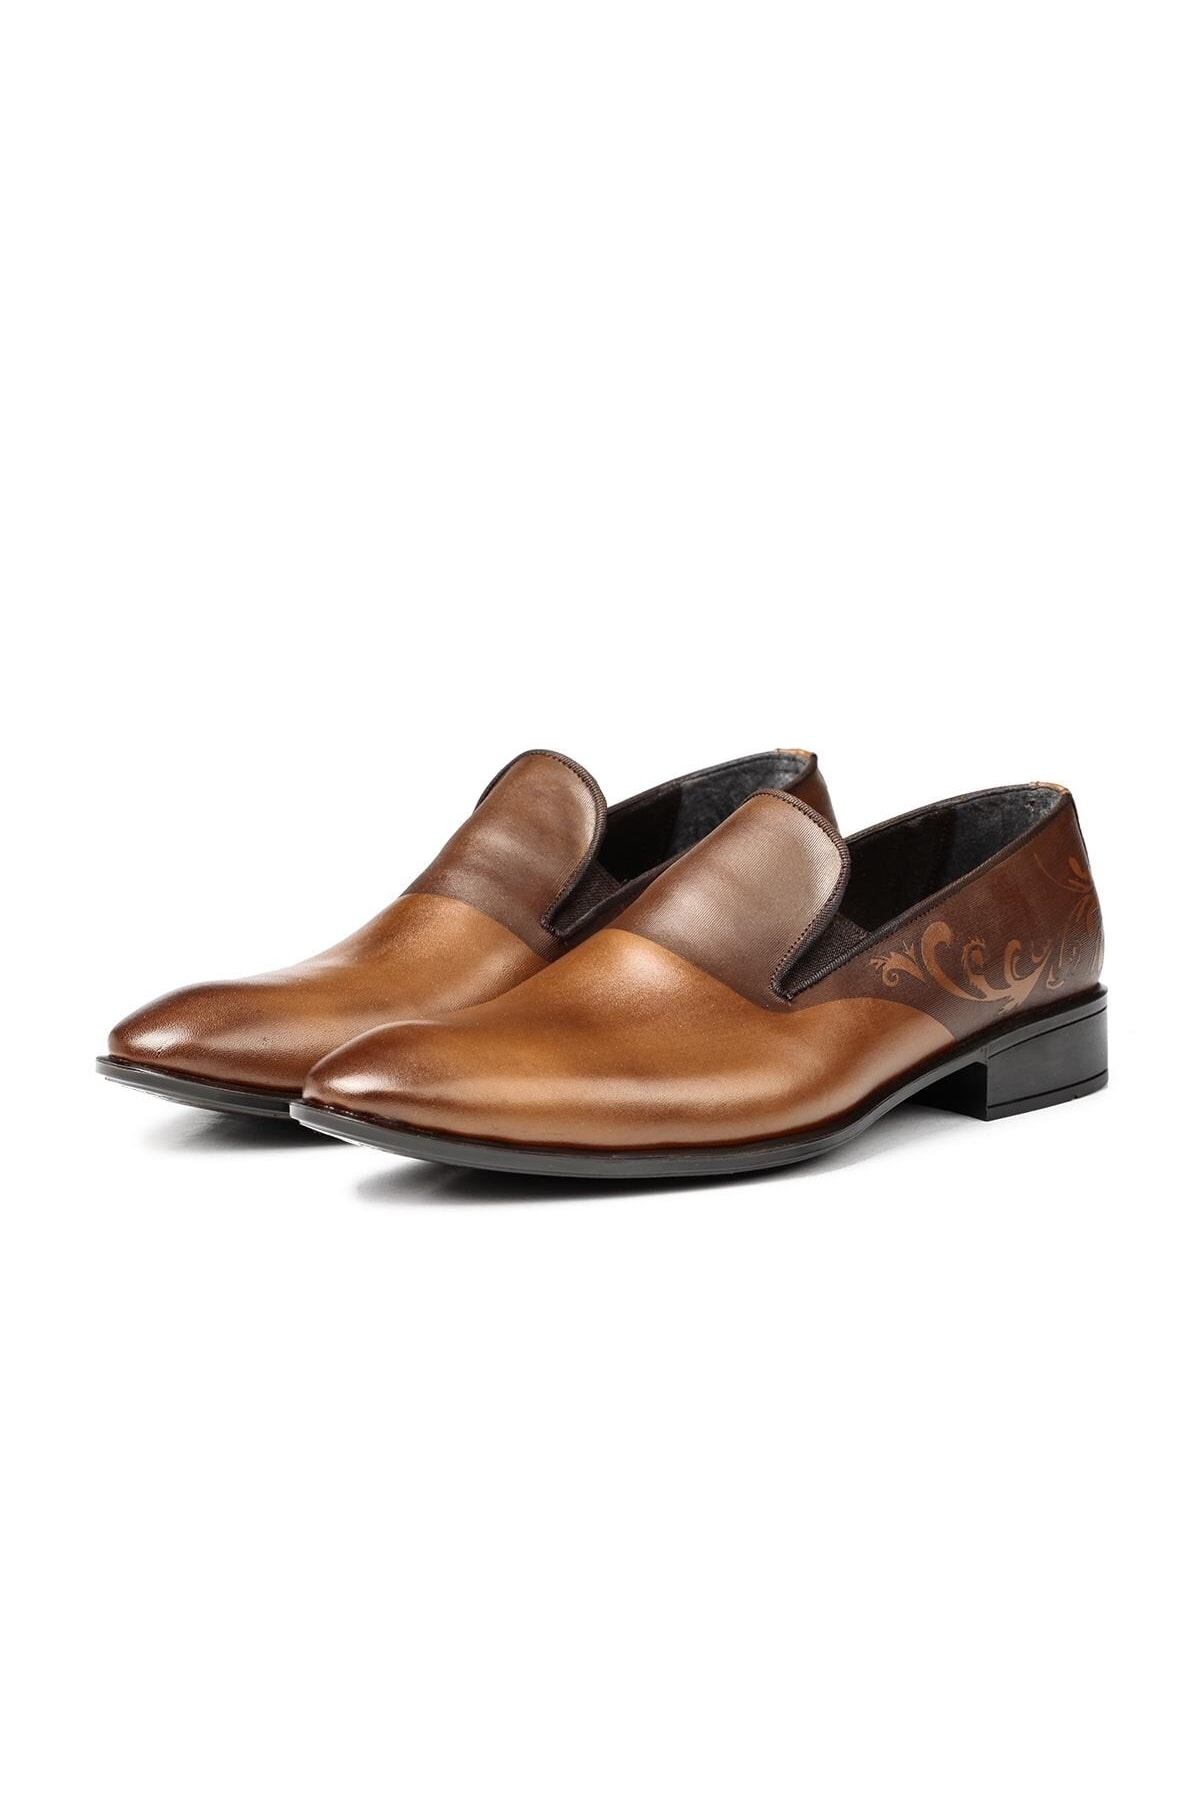 Levně Ducavelli Gentle Genuine Leather Men's Classic Shoes, Loafers Classic Shoes, Loafers.